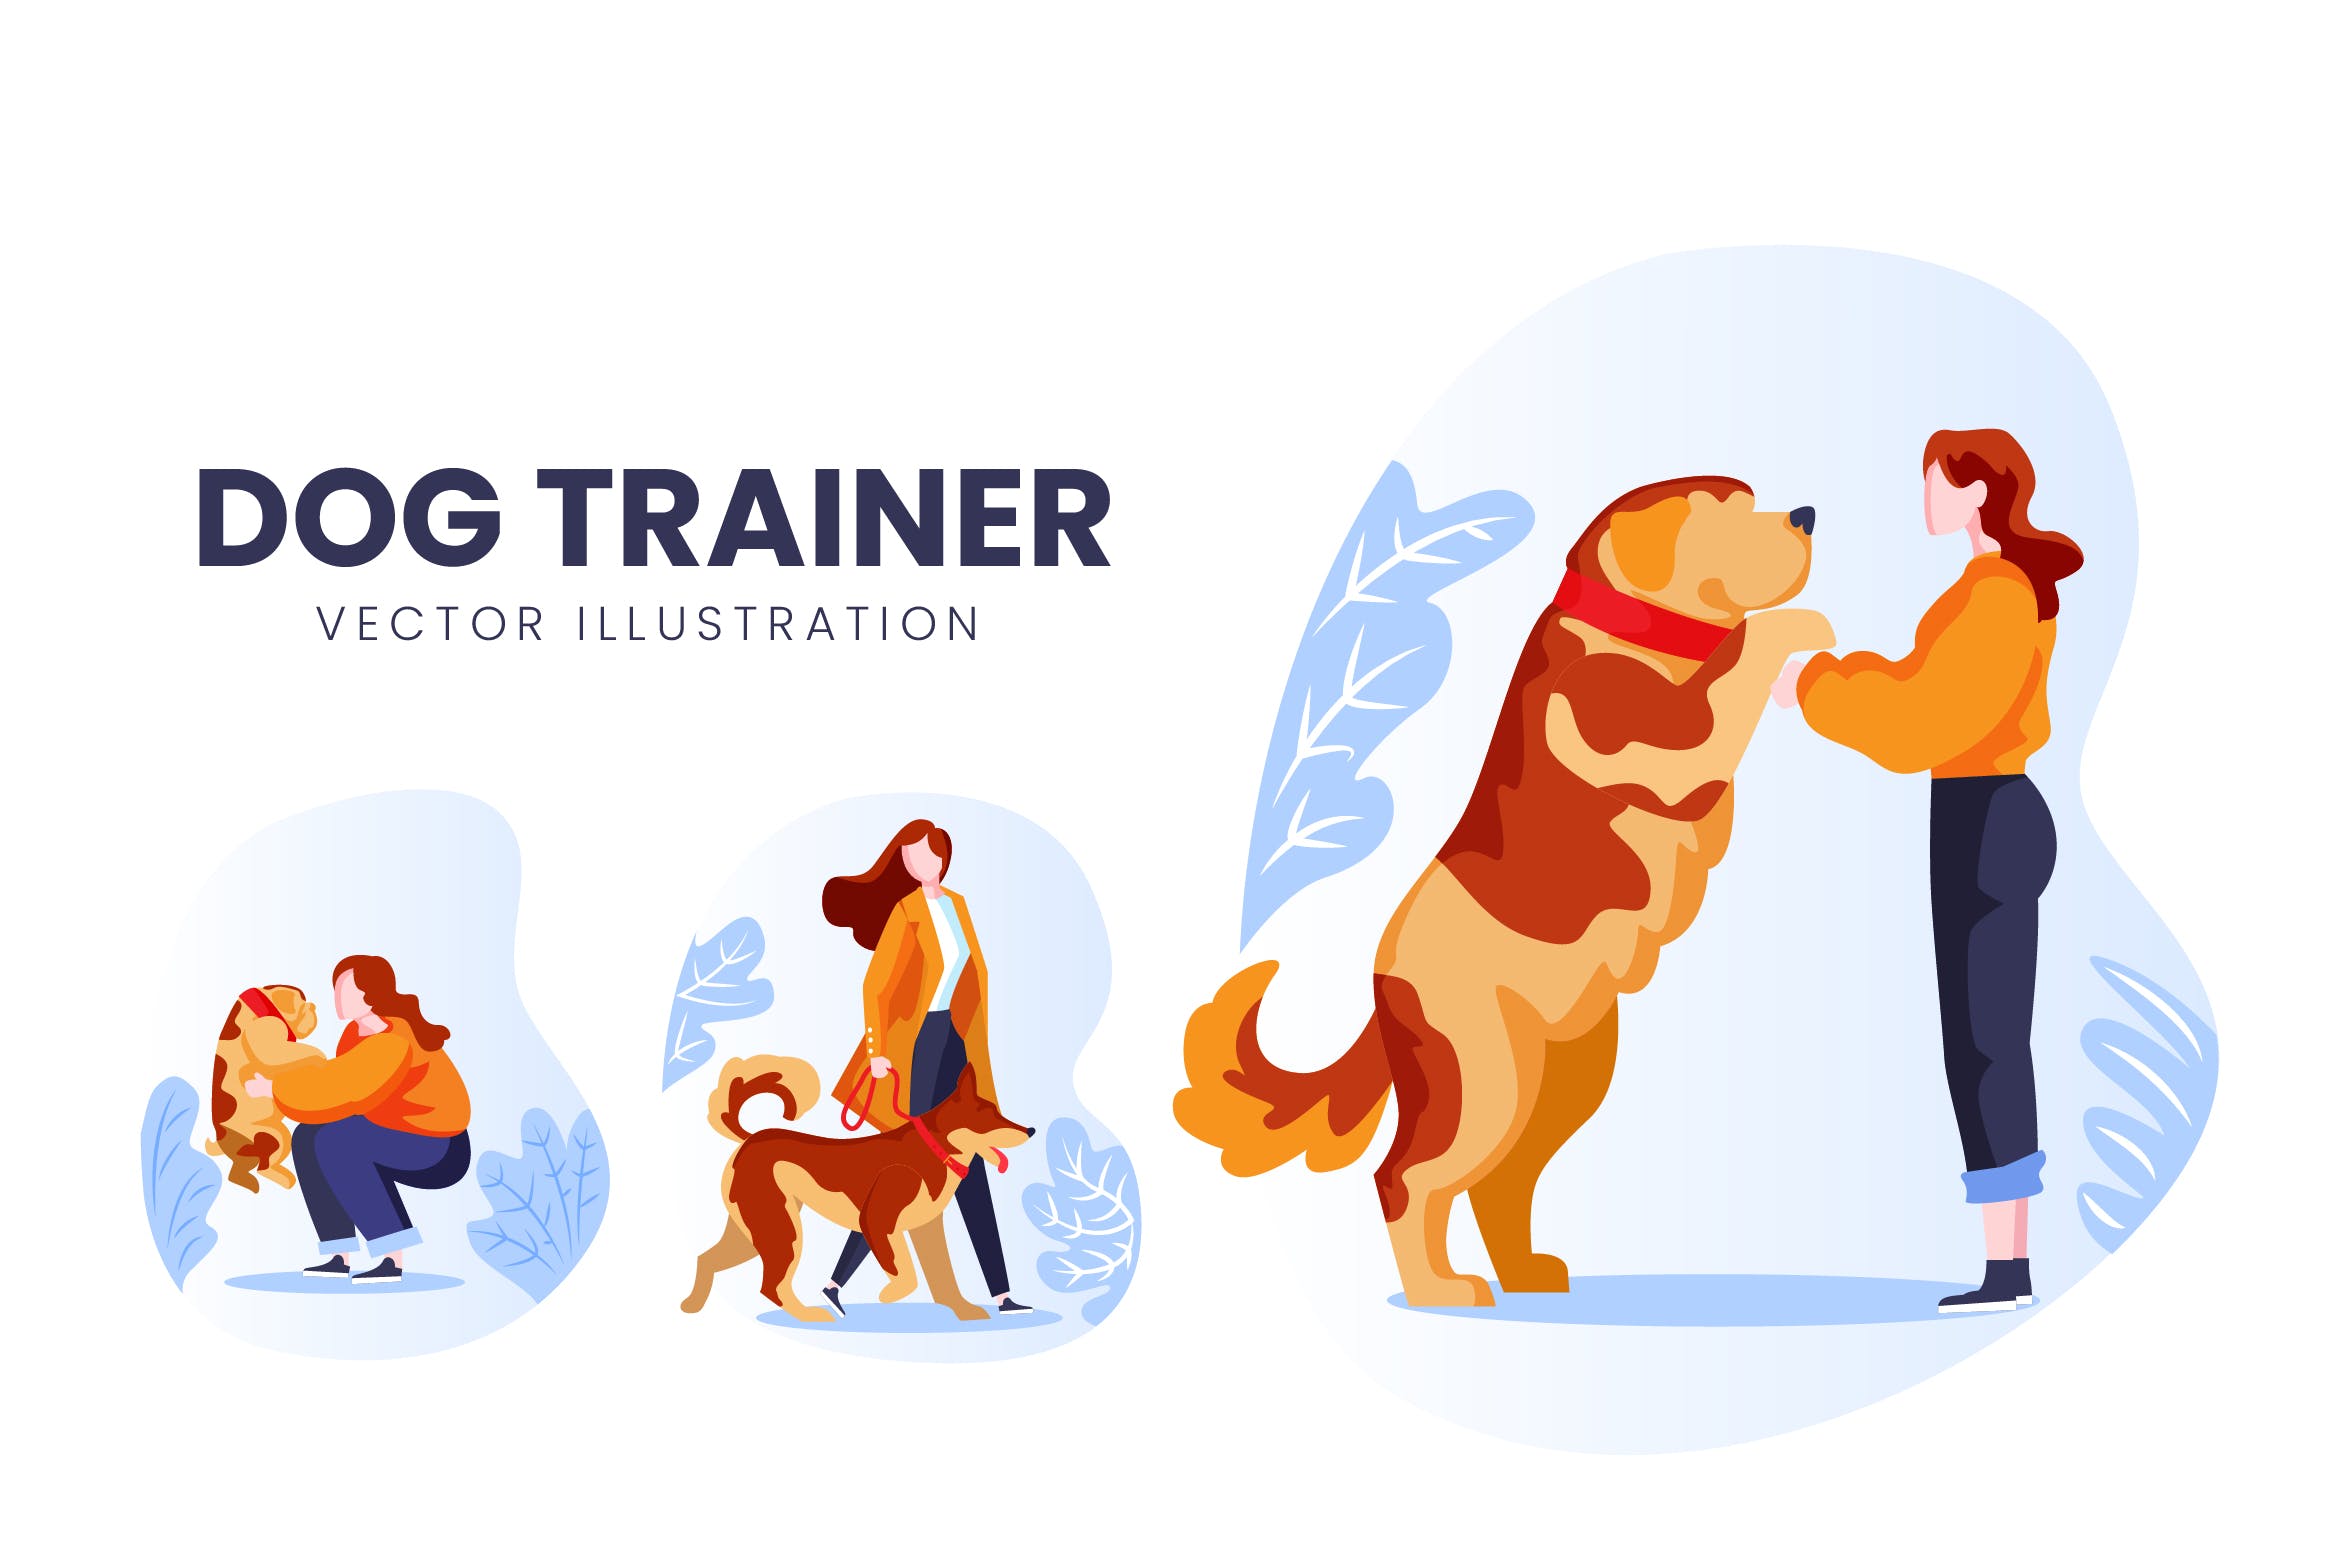 训犬员人物形象16图库精选手绘插画矢量素材 Dog Trainer Vector Character Set插图